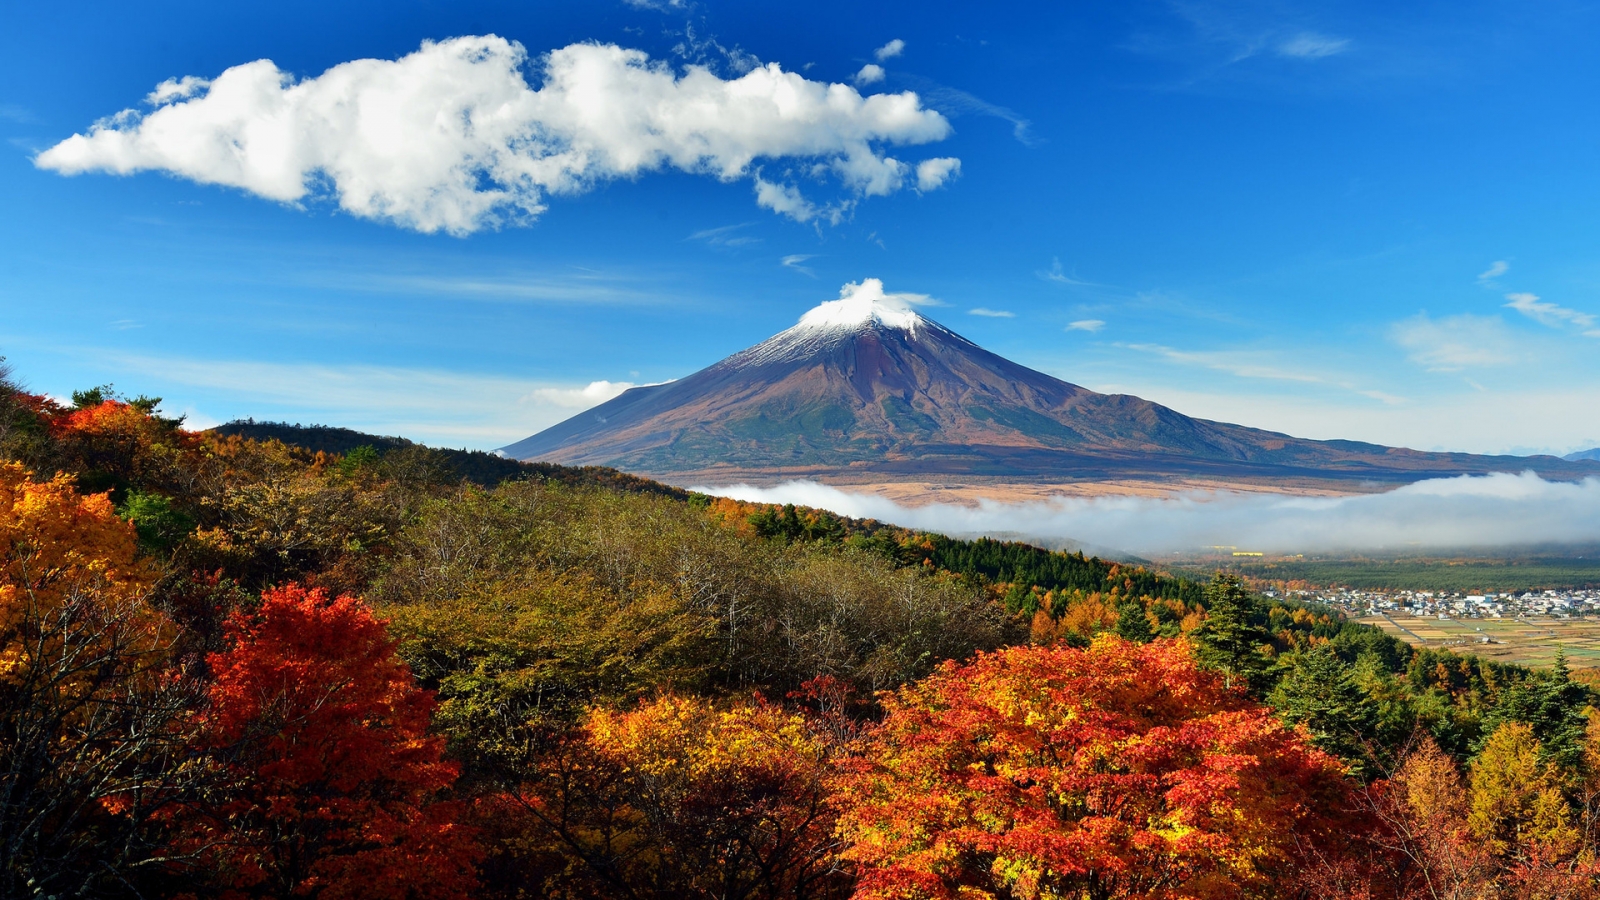 Mount Fuji Japan for 1600 x 900 HDTV resolution